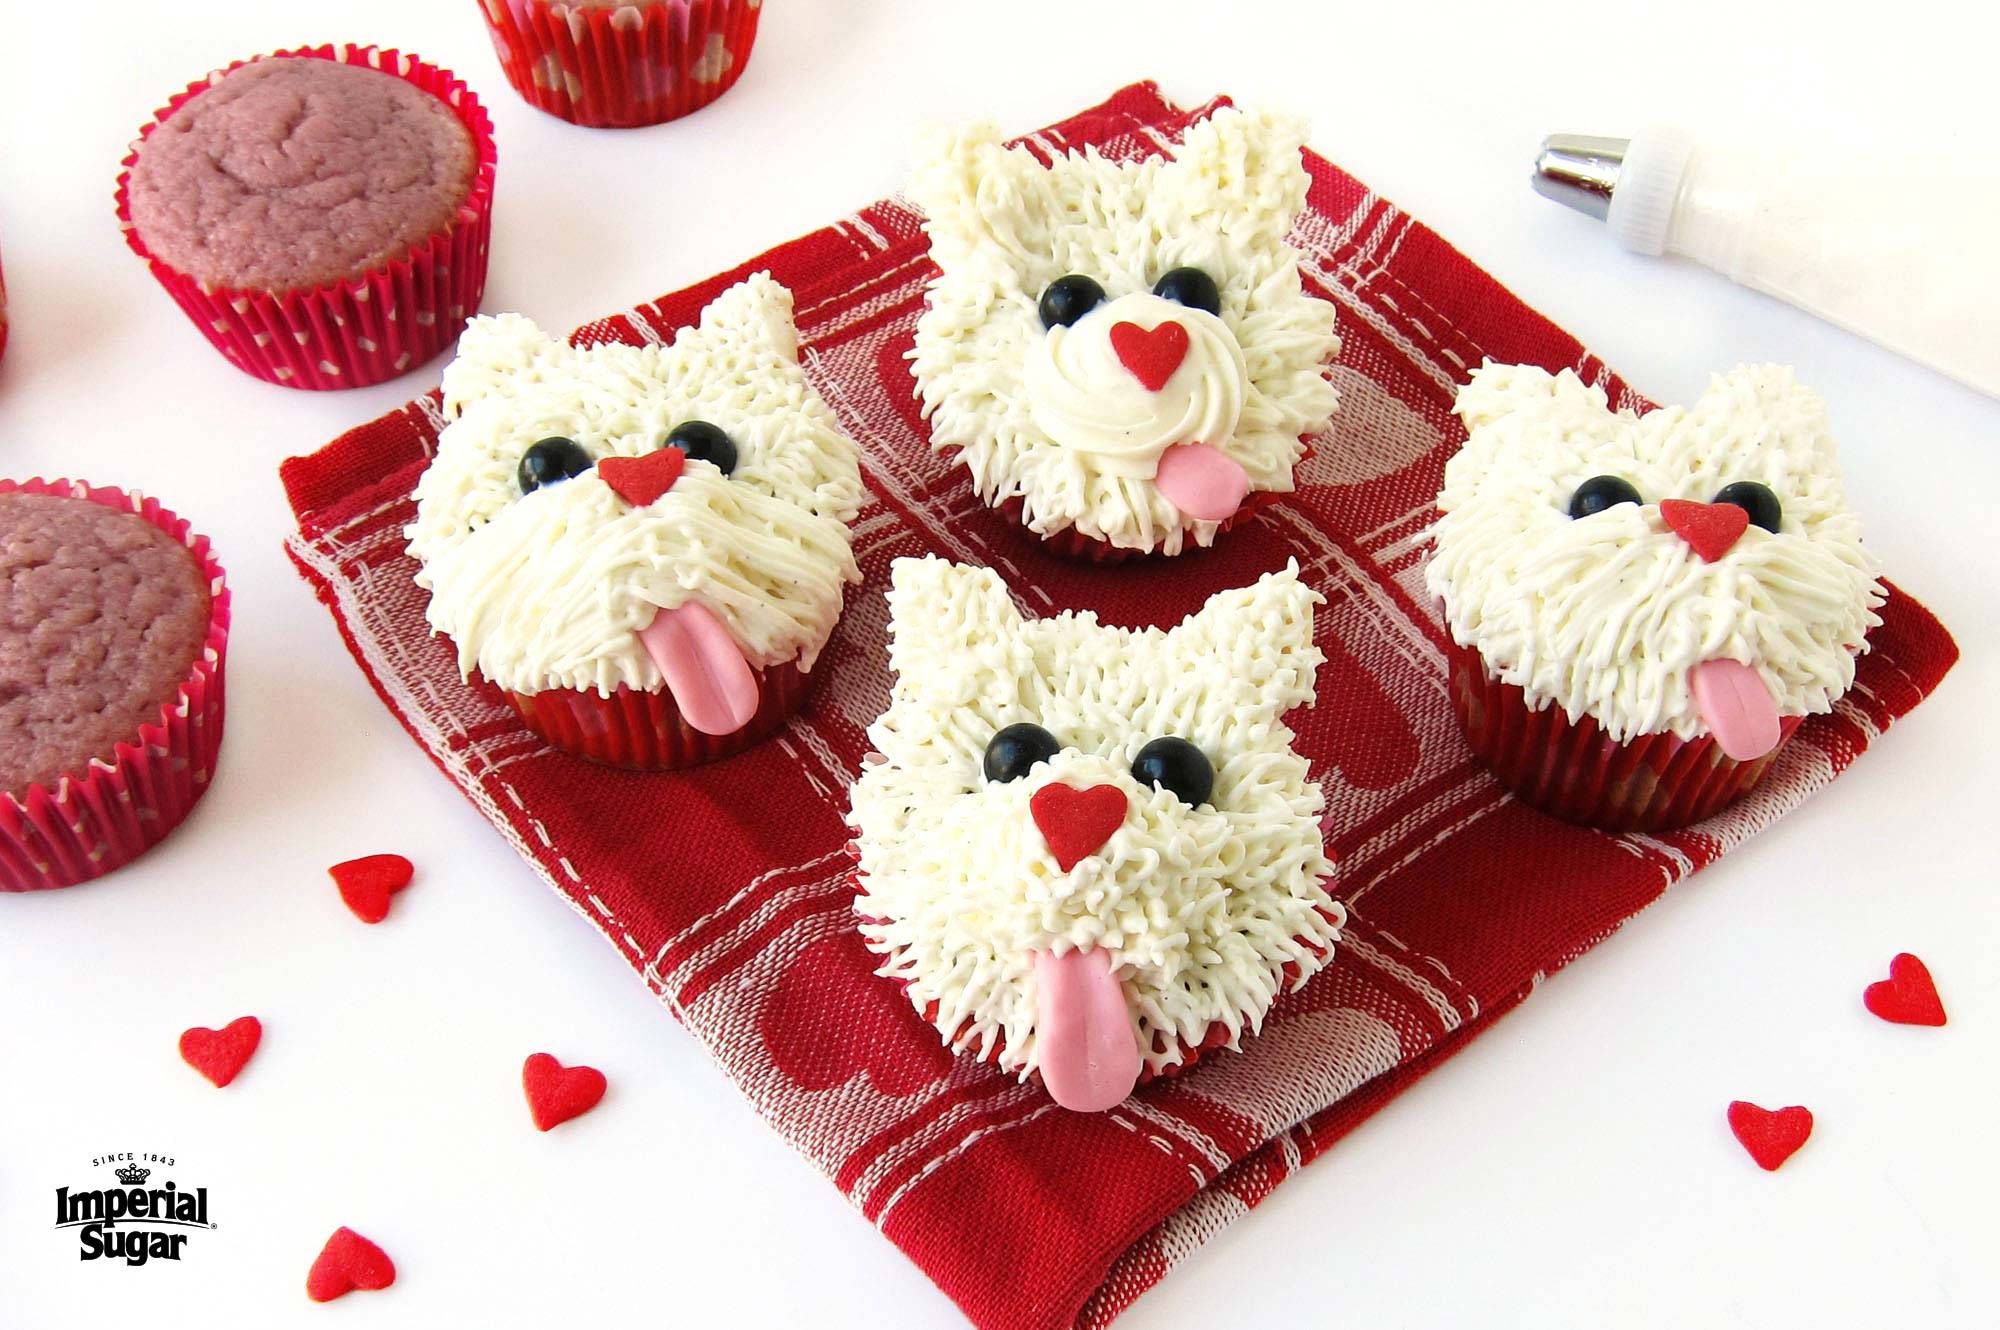 Love Letter Raspberry Chocolate Cupcakes